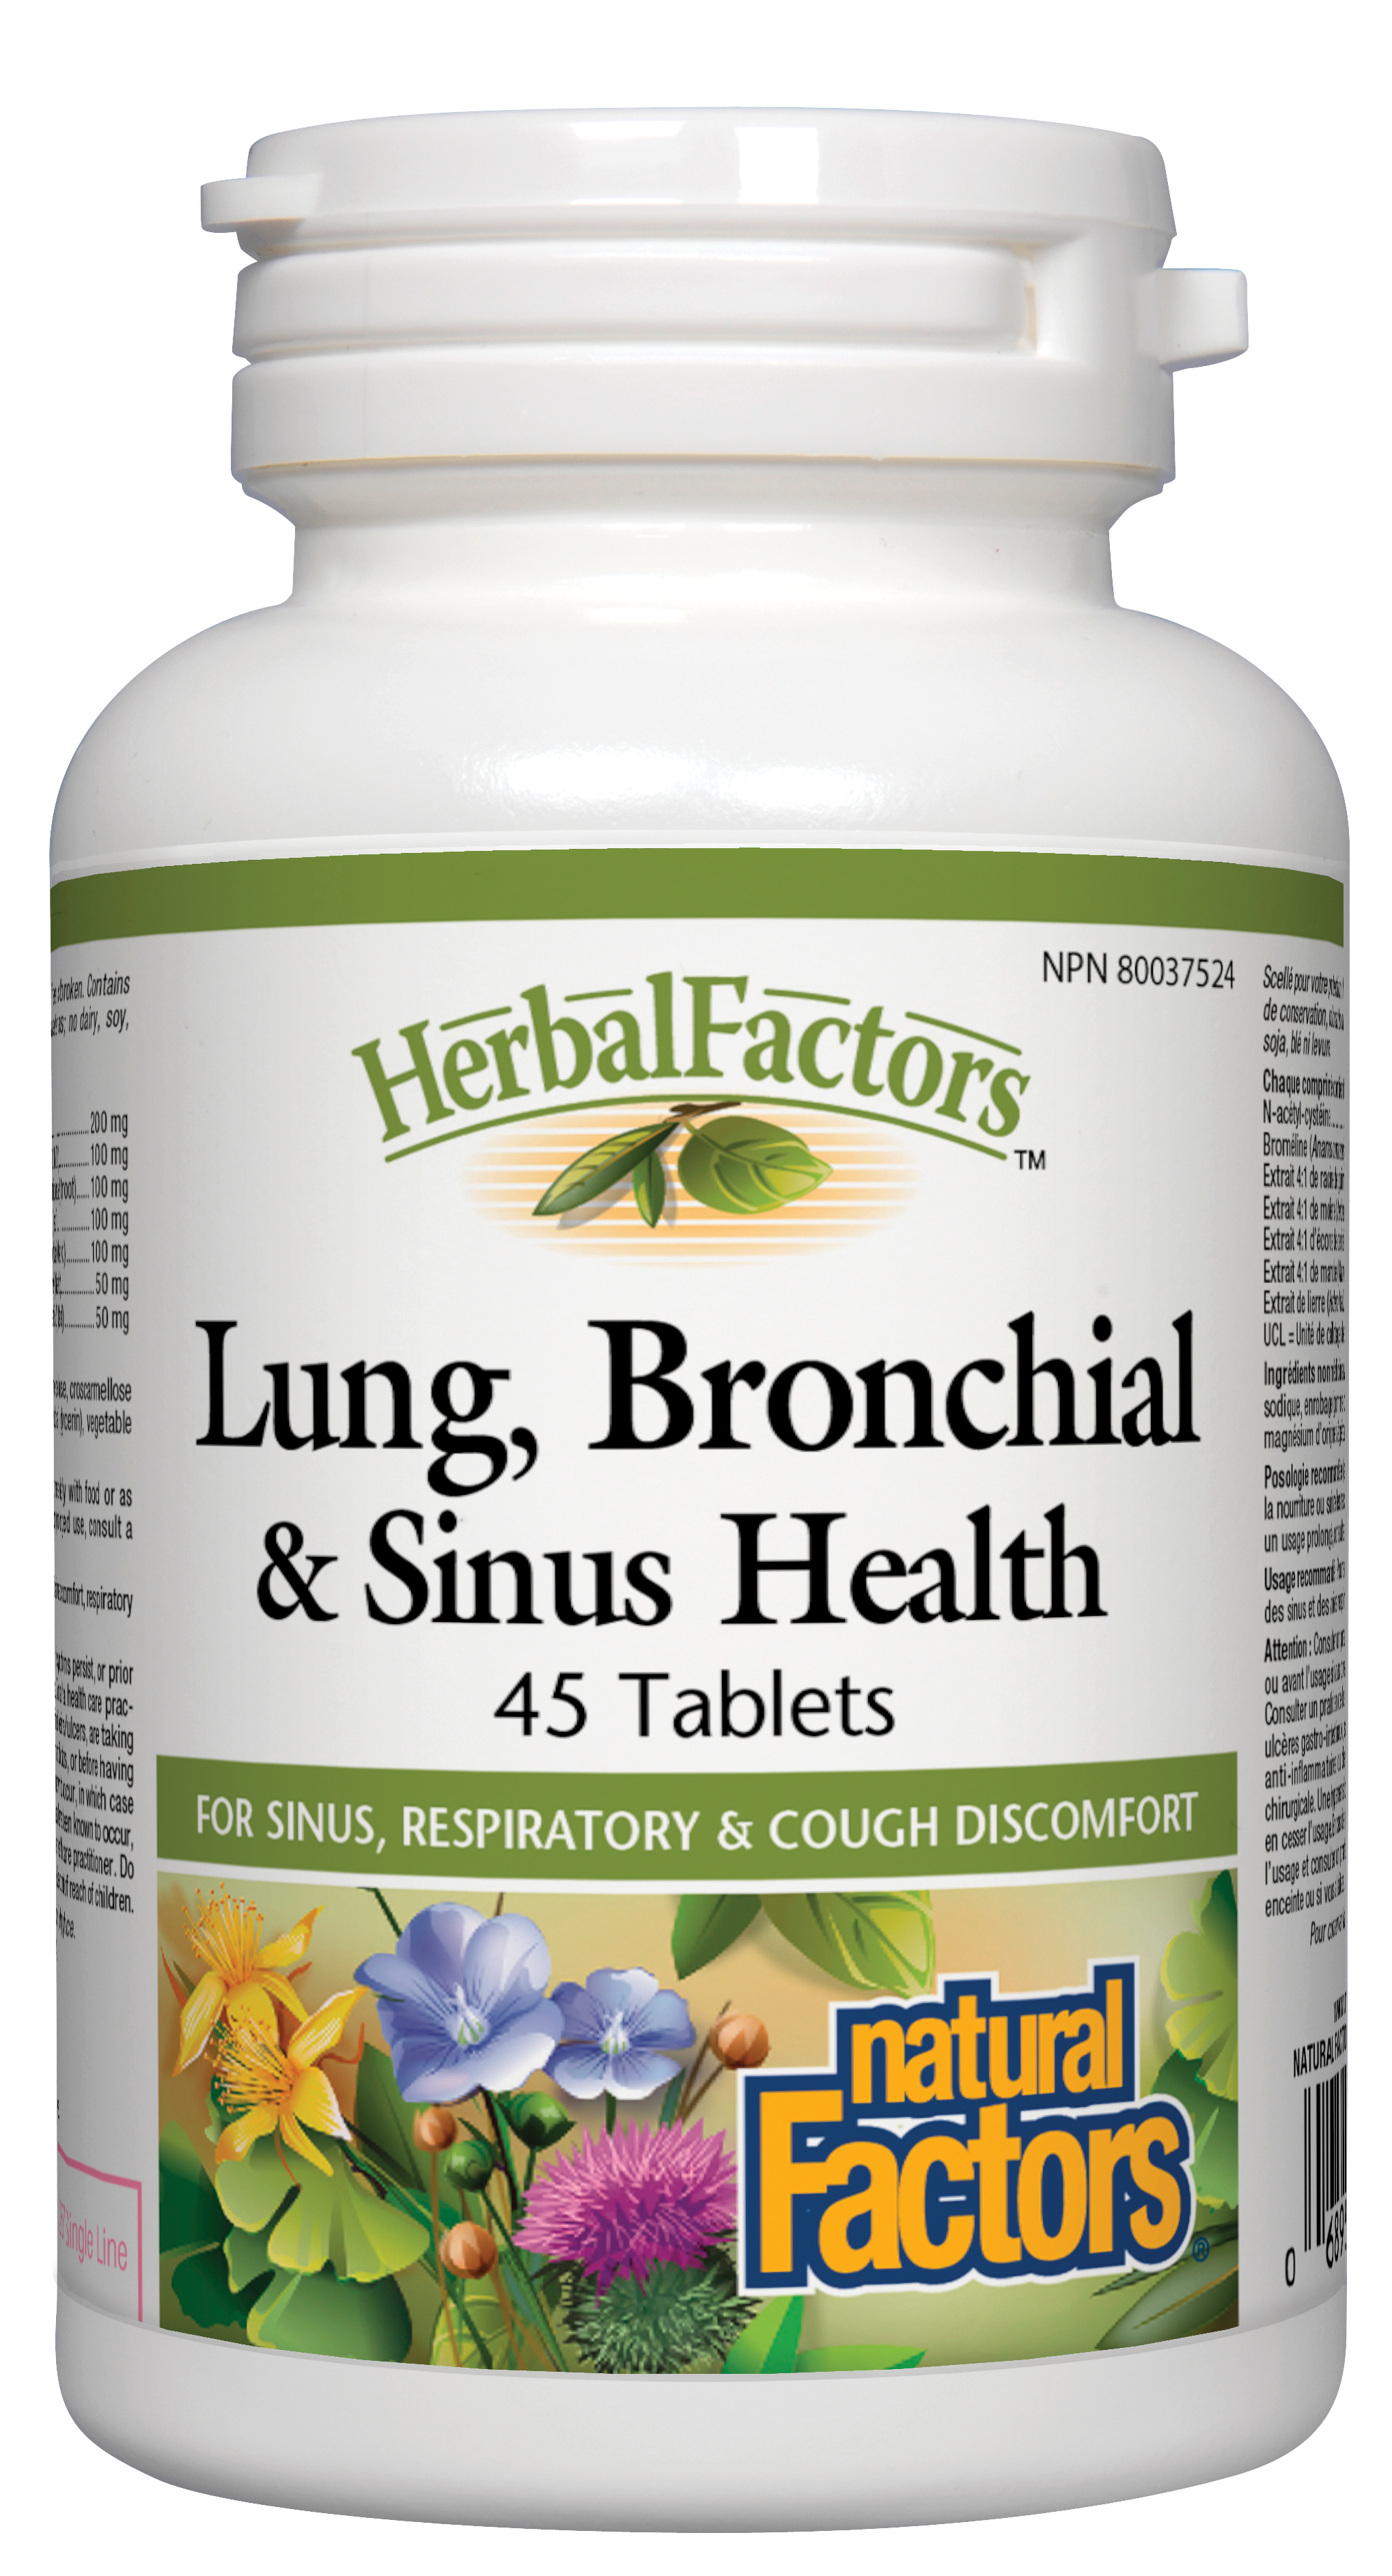 Natural Factors HerbalFactors Lung, Bronchial & Sinus Health 45 Tablets